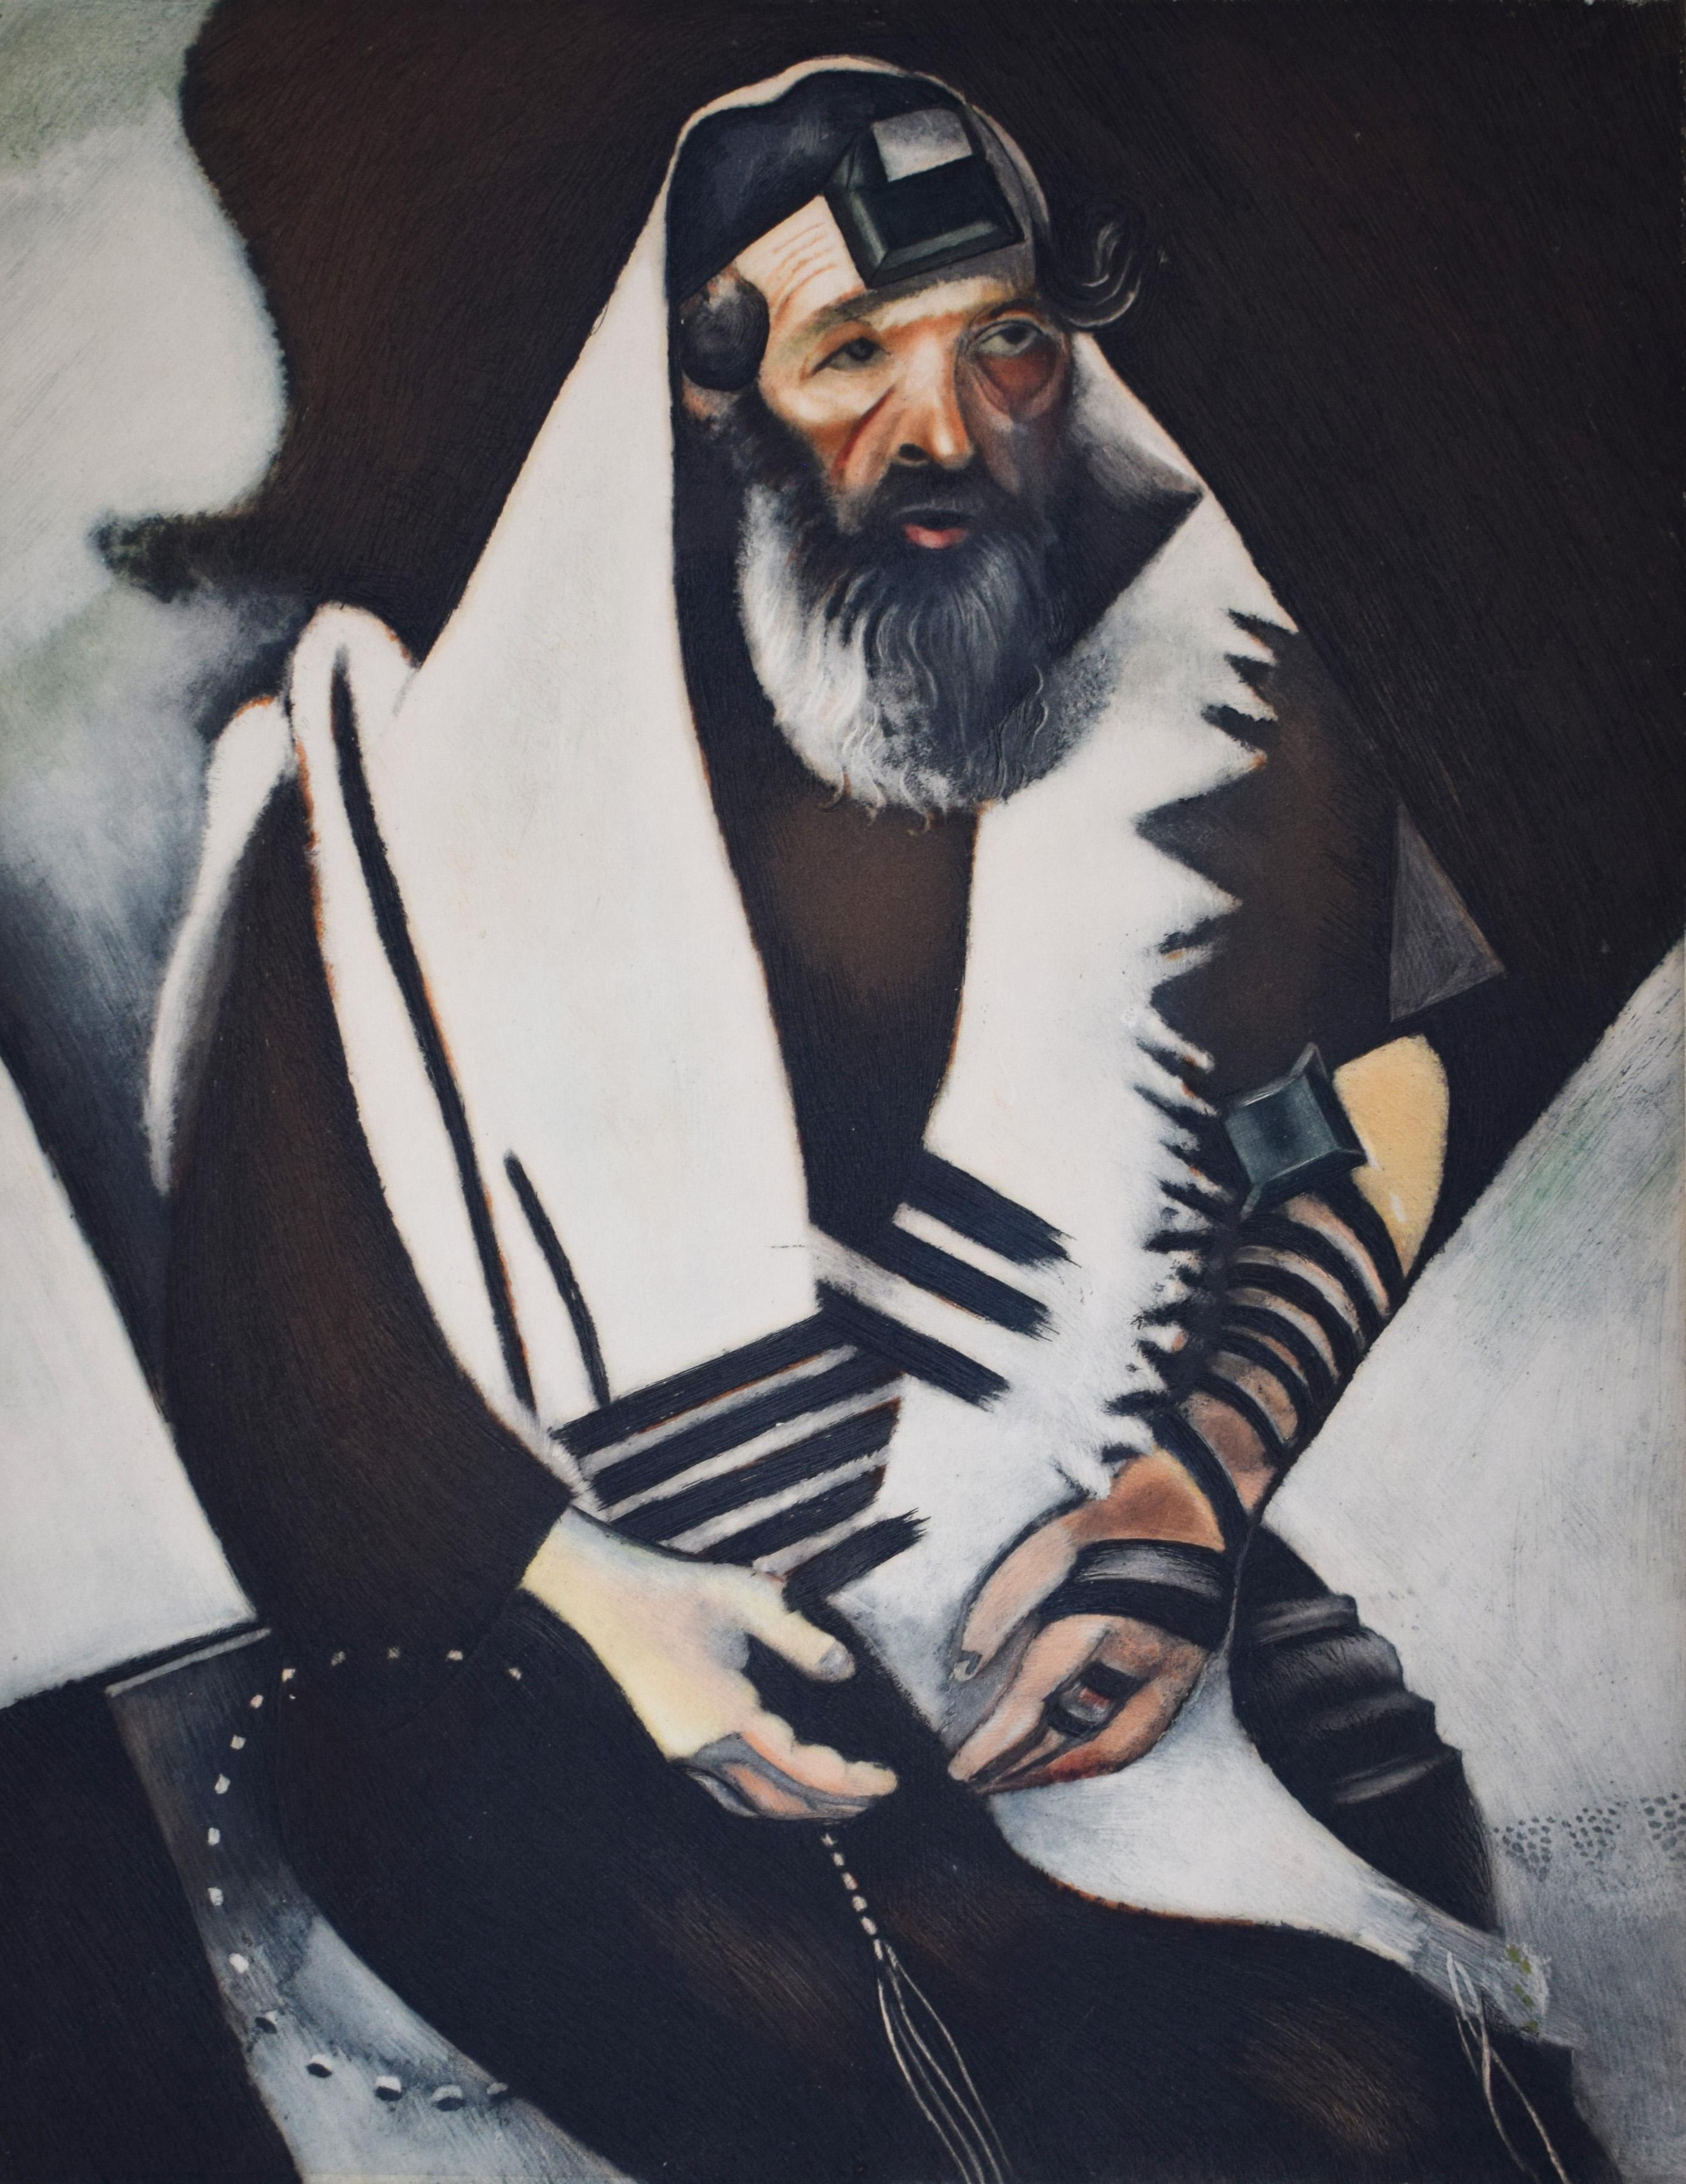 (after) Marc Chagall Portrait Print - The Rabbi of Vitebsk (The Praying Jew) - Religious Rabbi Judaica Prayer